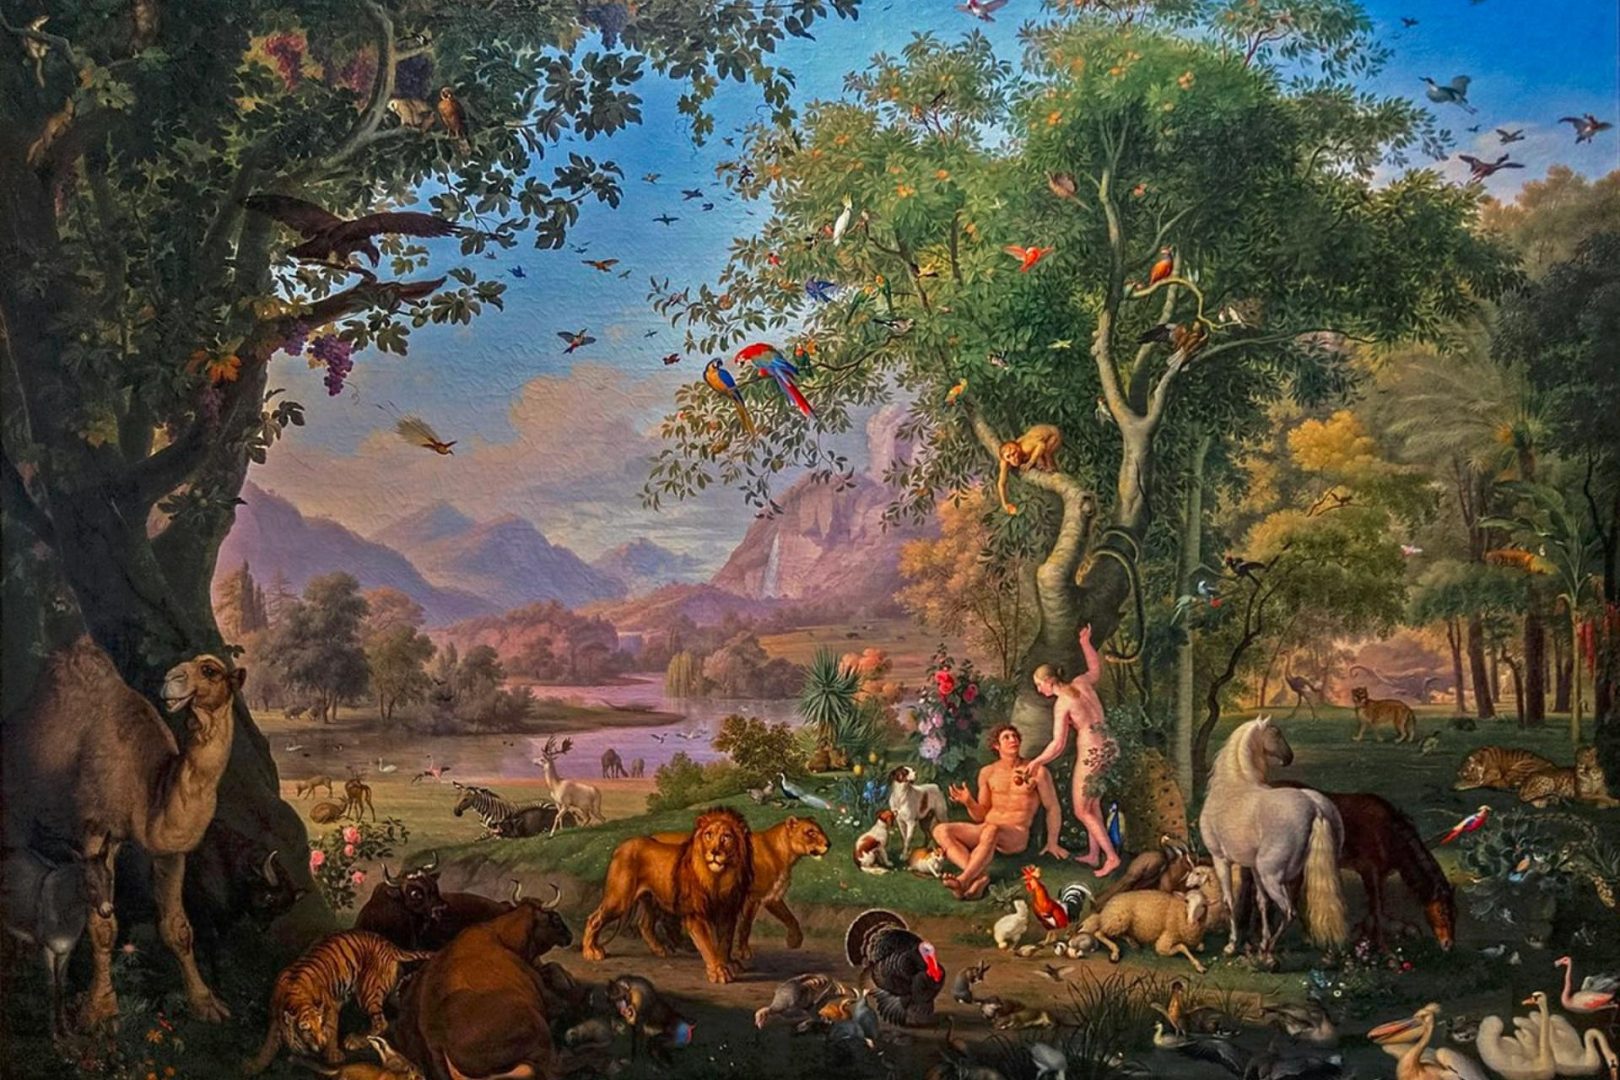 Artwork: Adam and Eve in the Garden of Eden by Johann Wenzel Peter.